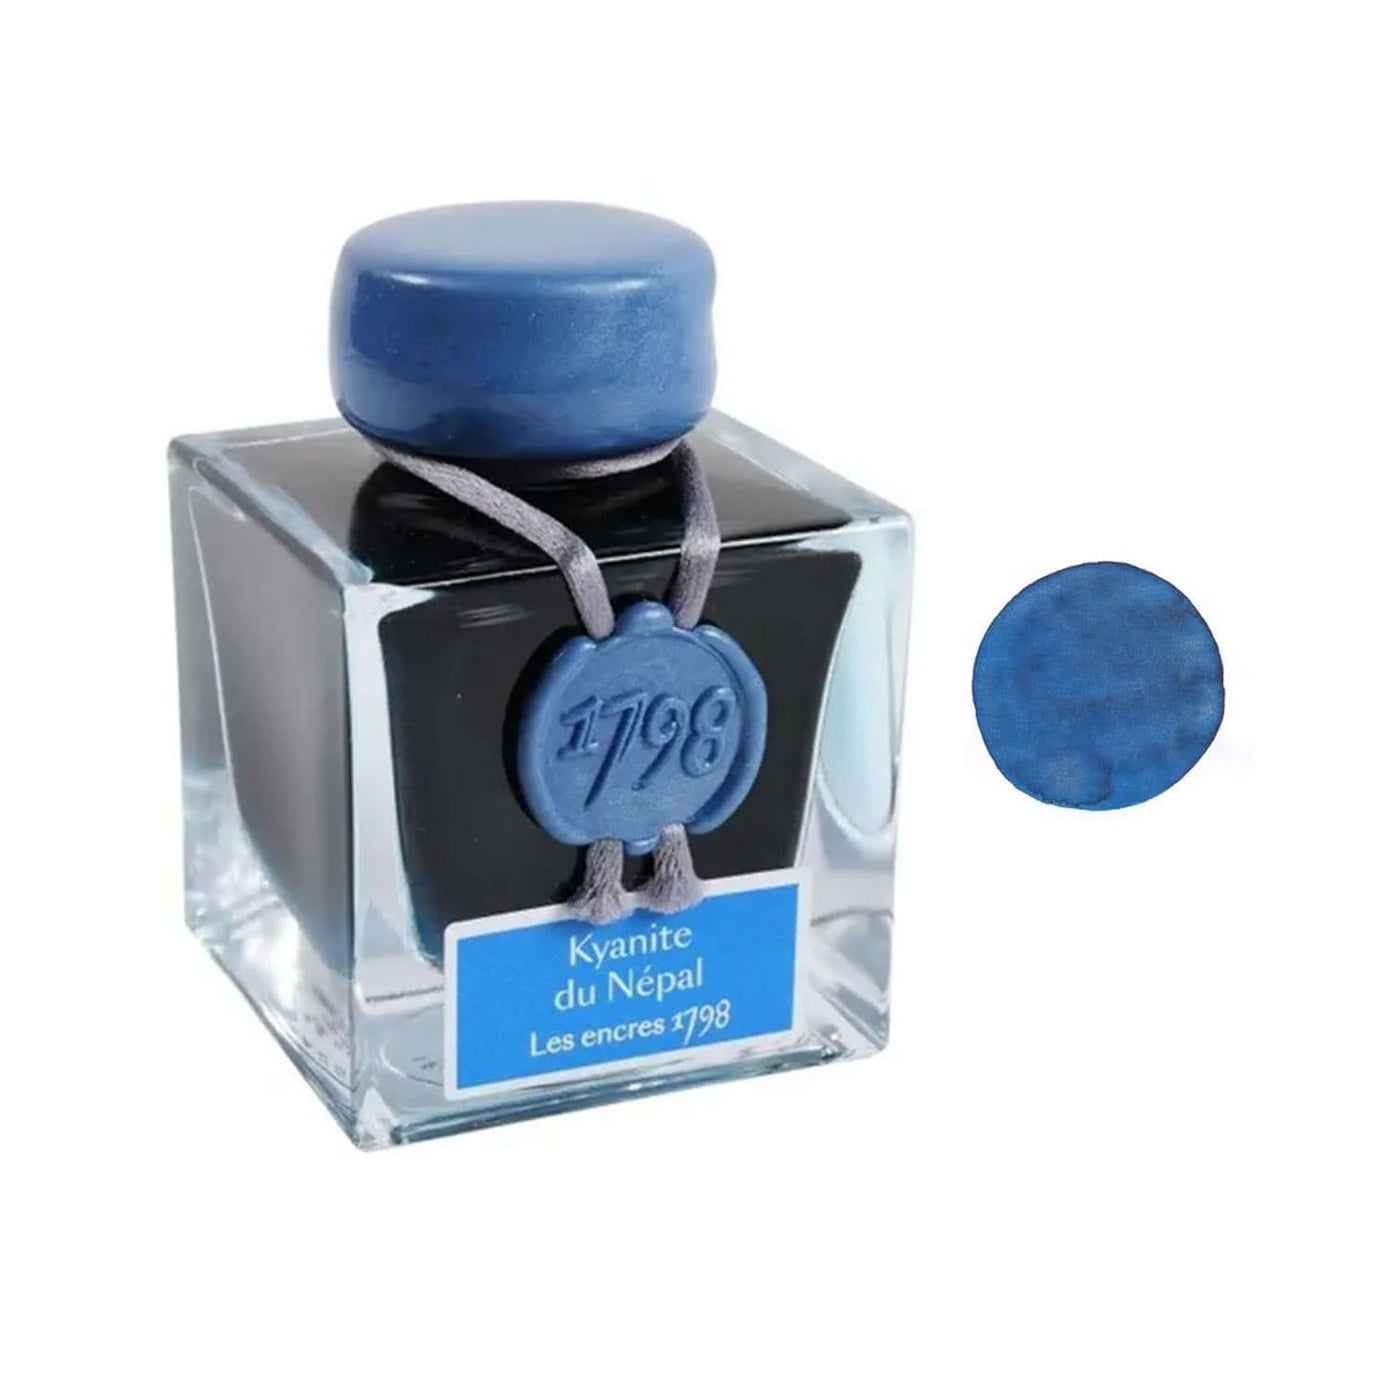 J Herbin 1798 Special Edition Silver Shimmer Inks Kyanite du Nepal (Blue) - 50ml